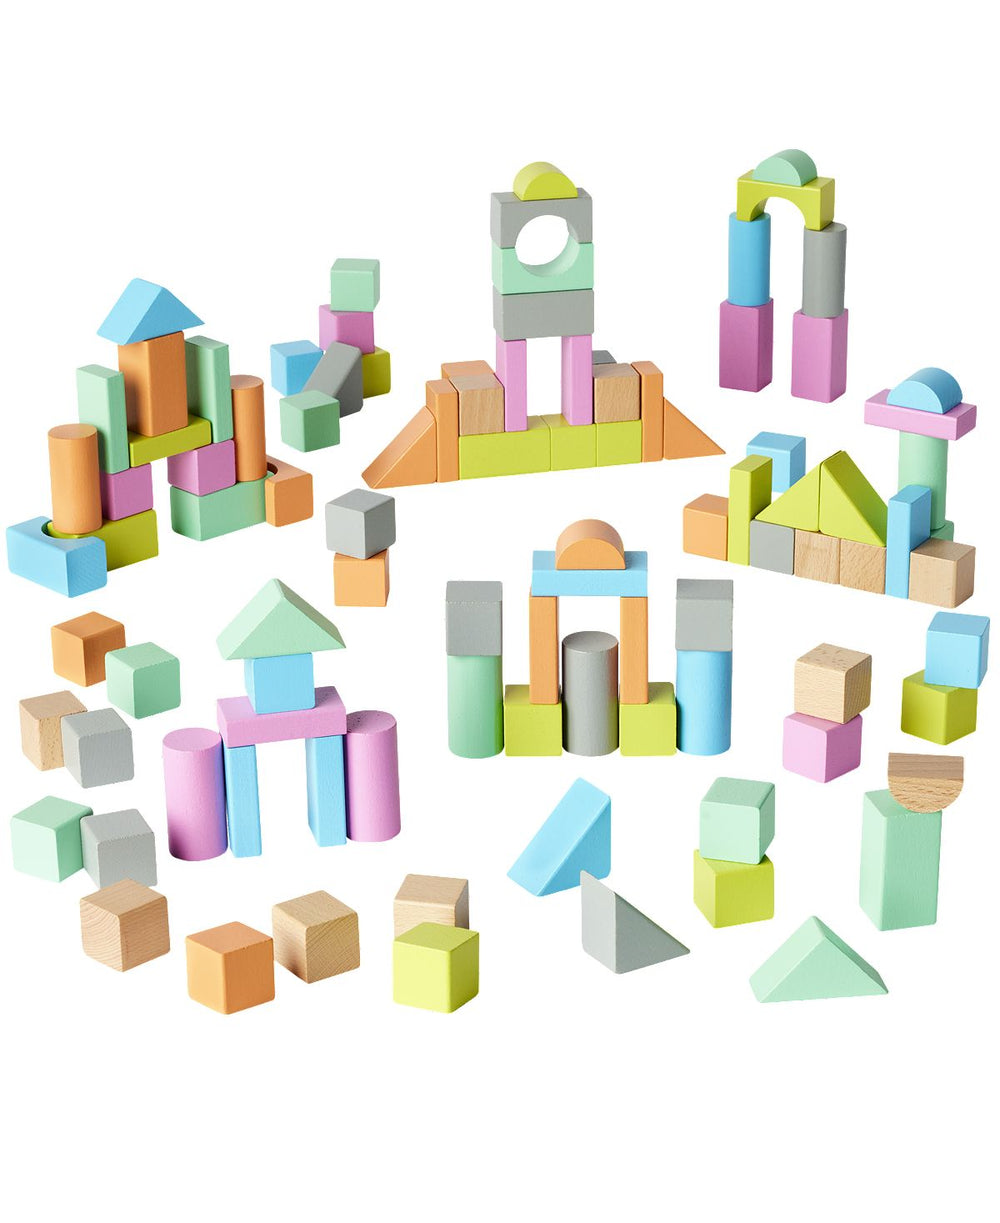 Imaginarium 100-Piece Wooden Block Set - Colorful Building Blocks for Creative Play